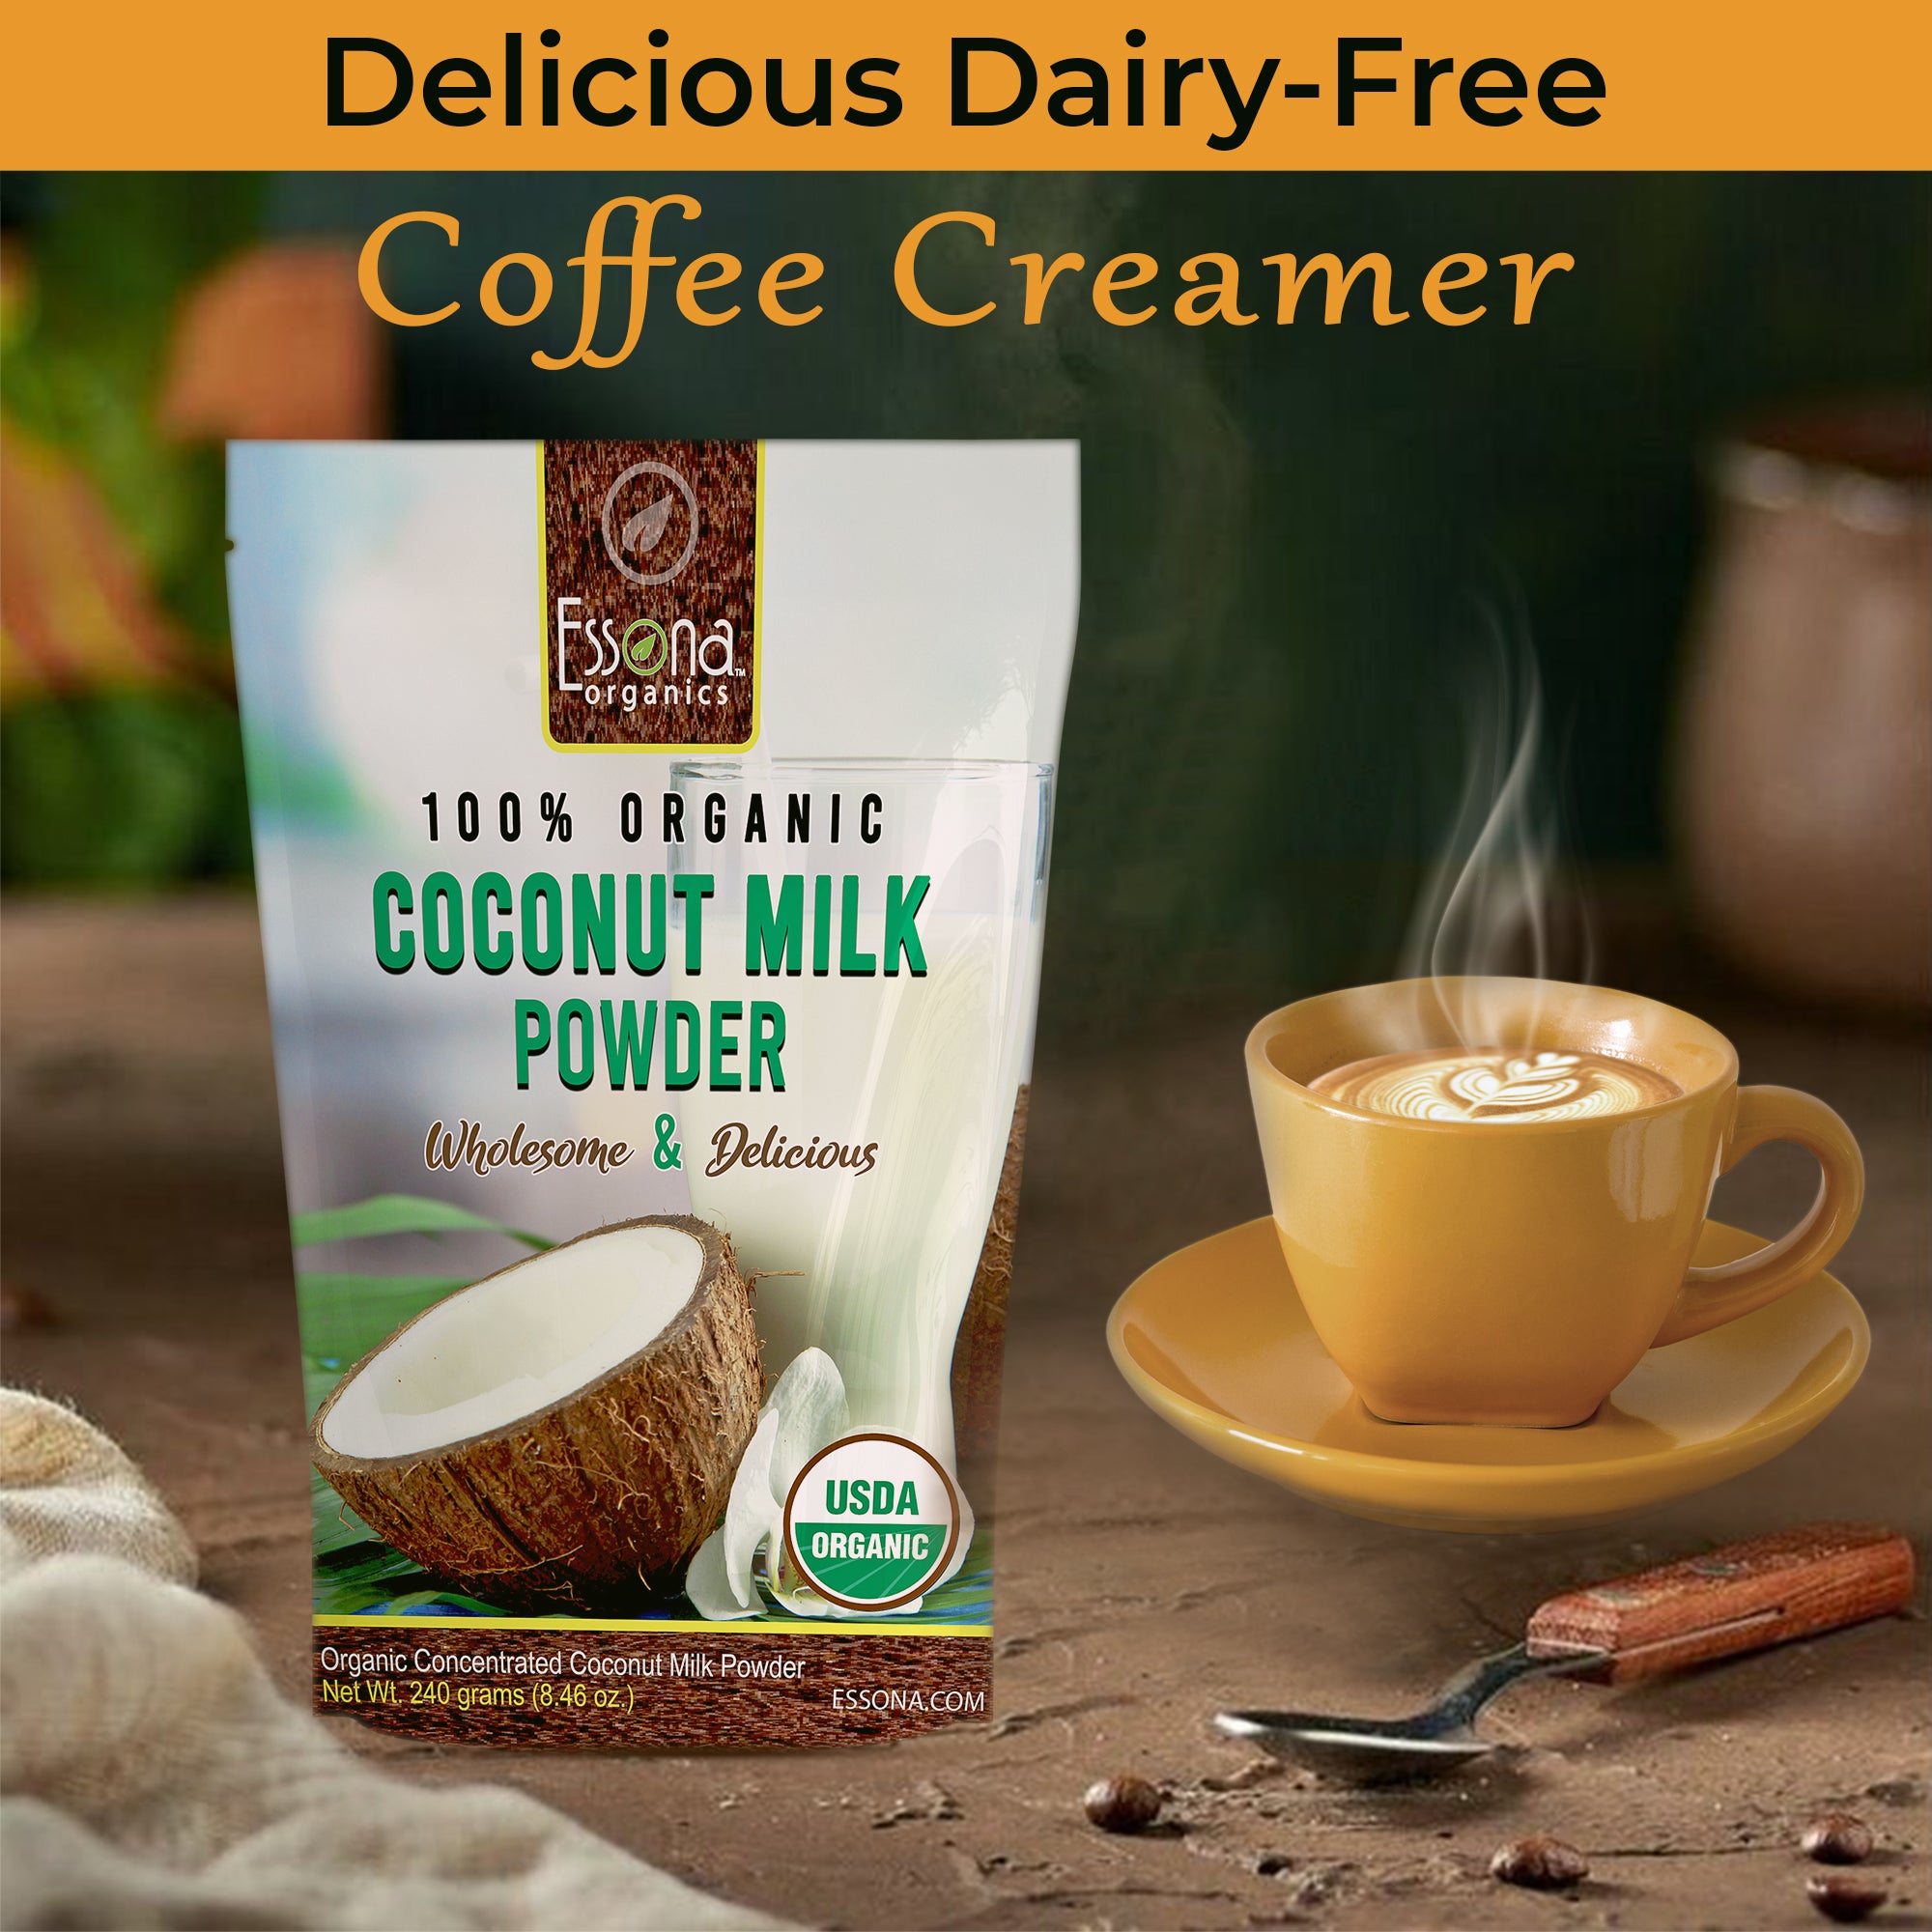 USDA Organic Coconut Milk Powder